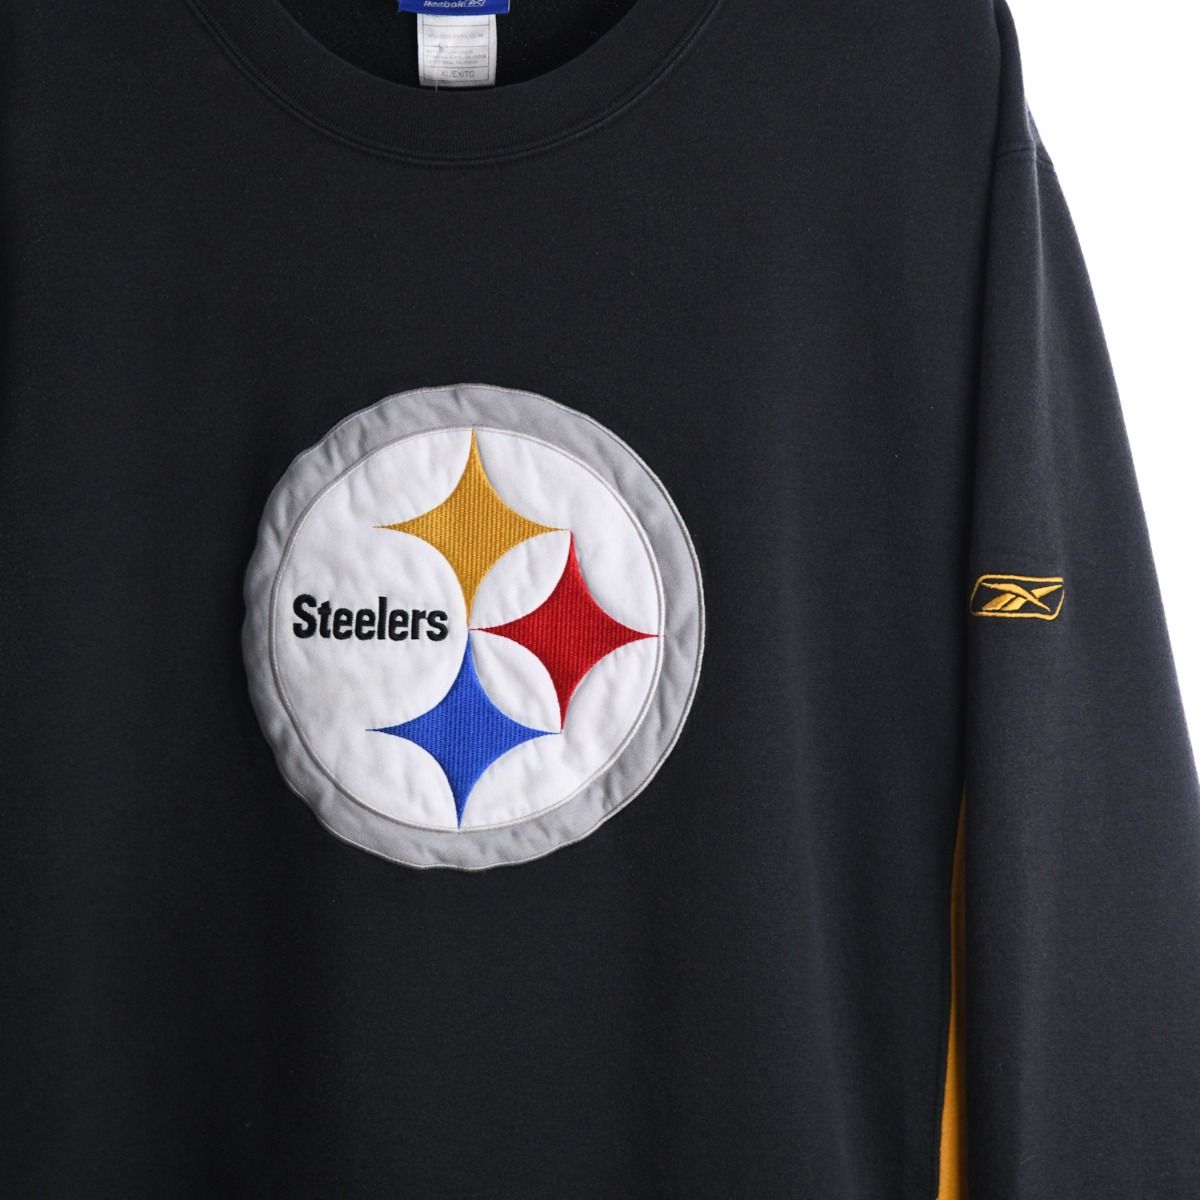 Pittsburgh Steelers X Reebok Sweatshirt